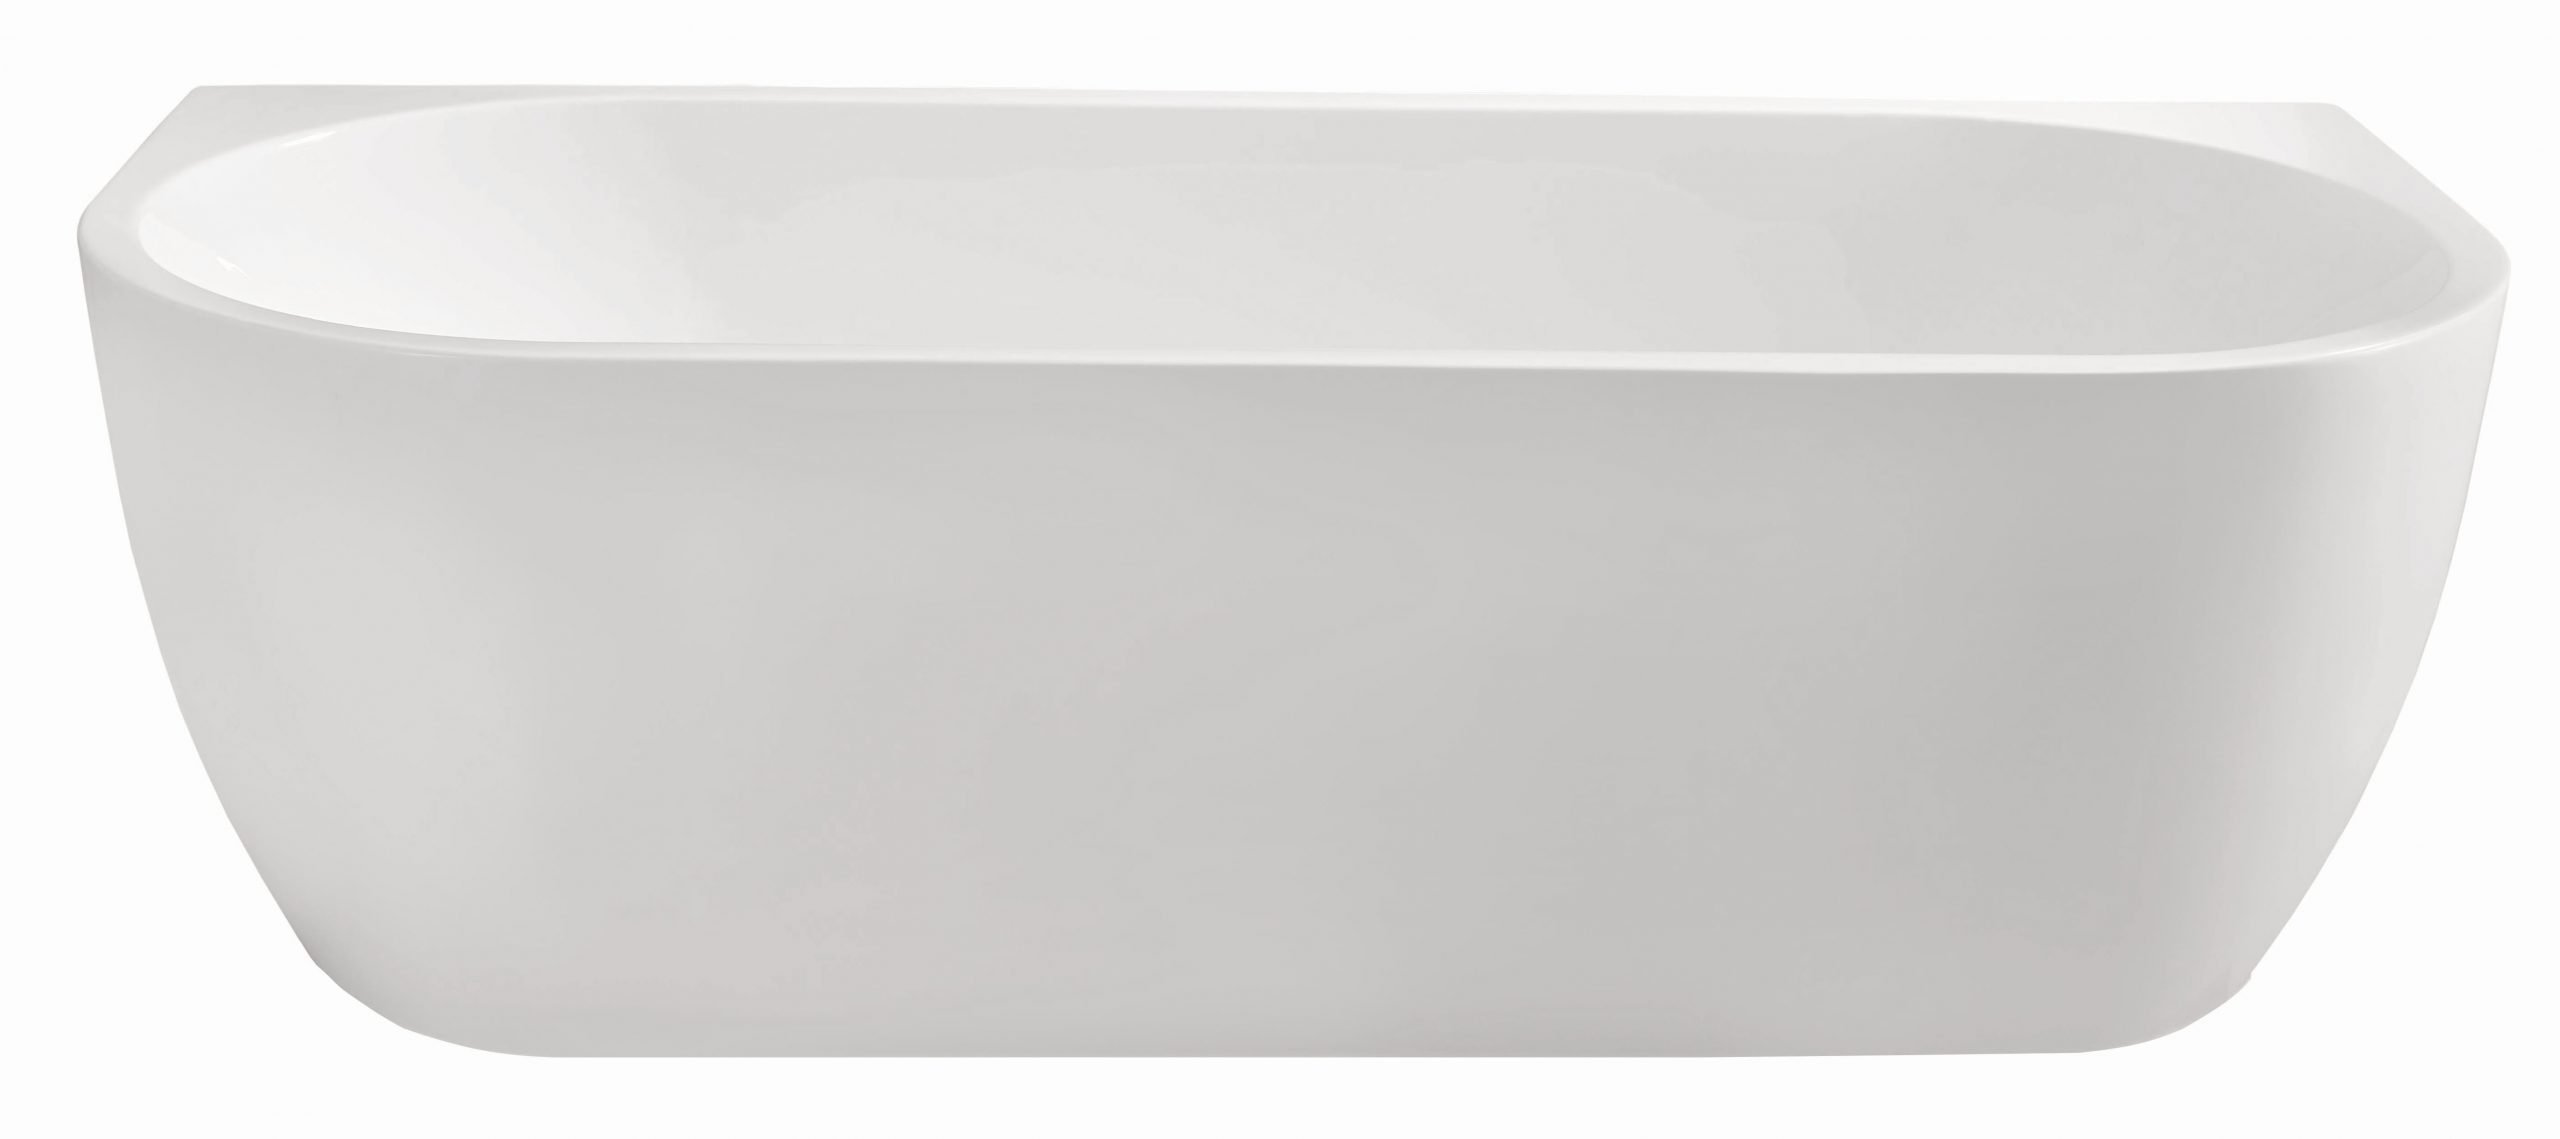 Product Wall half-vrijstaand acryl ligbad 170×75 wit